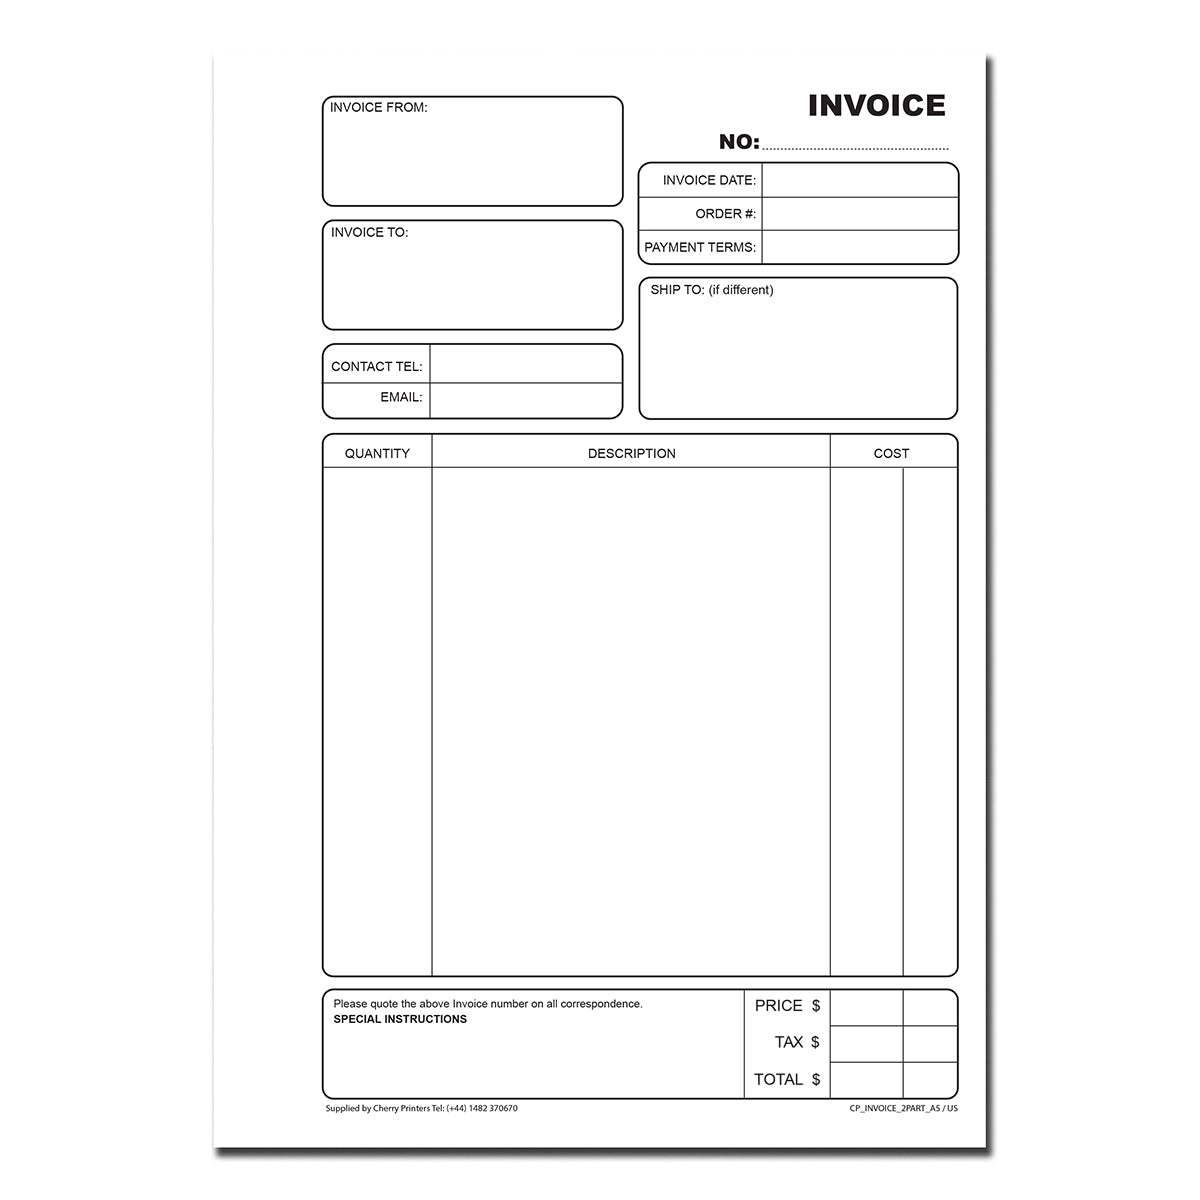 Invoice | Duplicate Book | 2 part | Carbonless | 50 Sets Per Book | A5 - 5.8" x 8.3" | BOX OF 40 BOOKS